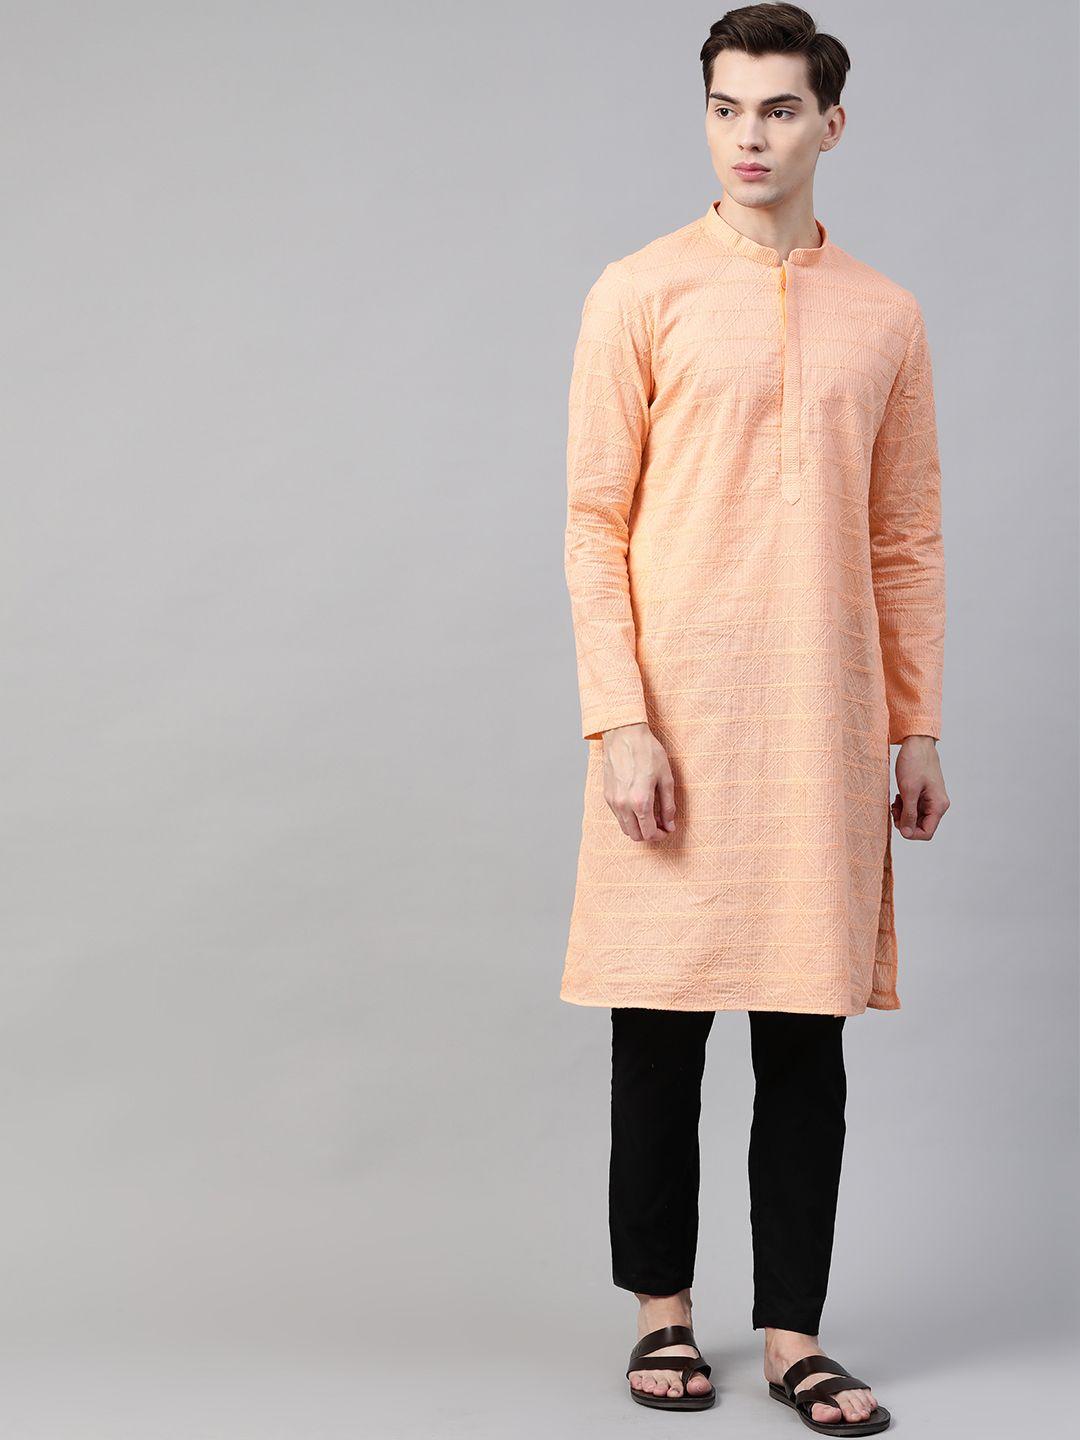 see designs men peach-colored ethnic motifs embroidered pure cotton thread work kurta